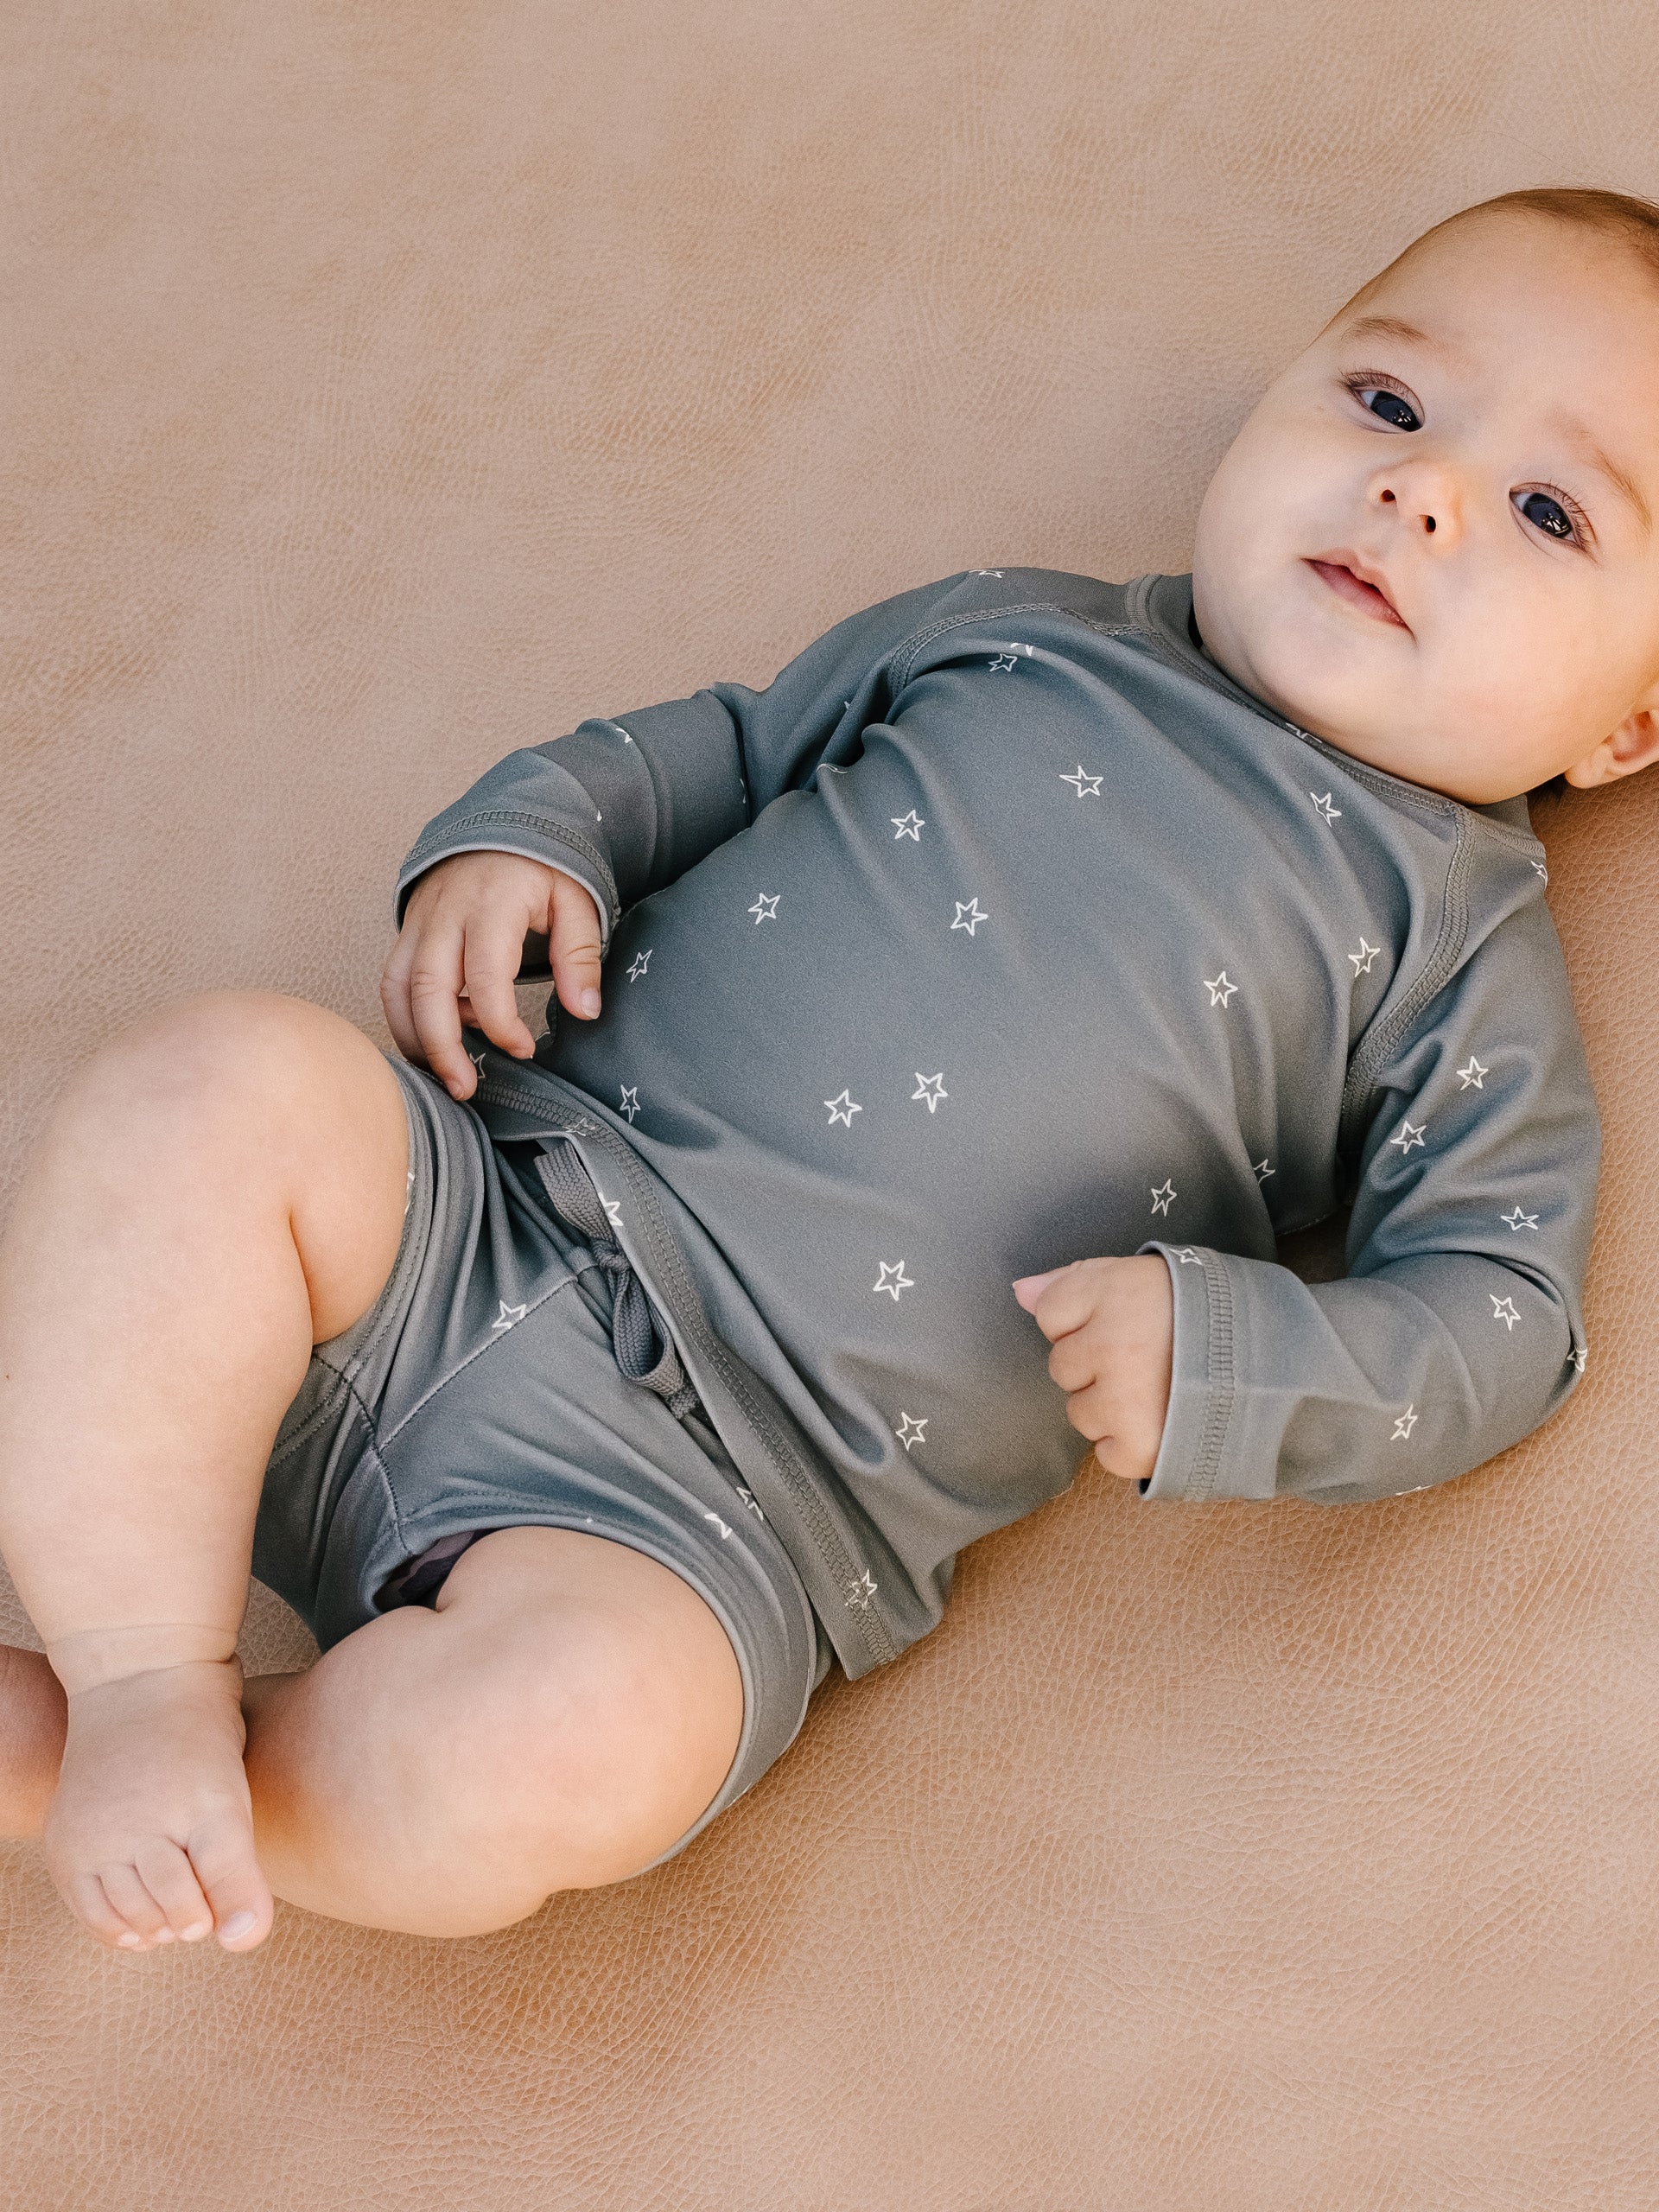 boys rashguard + short set | sea green - Quincy Mae | Baby Basics | Baby Clothing | Organic Baby Clothes | Modern Baby Boy Clothes |